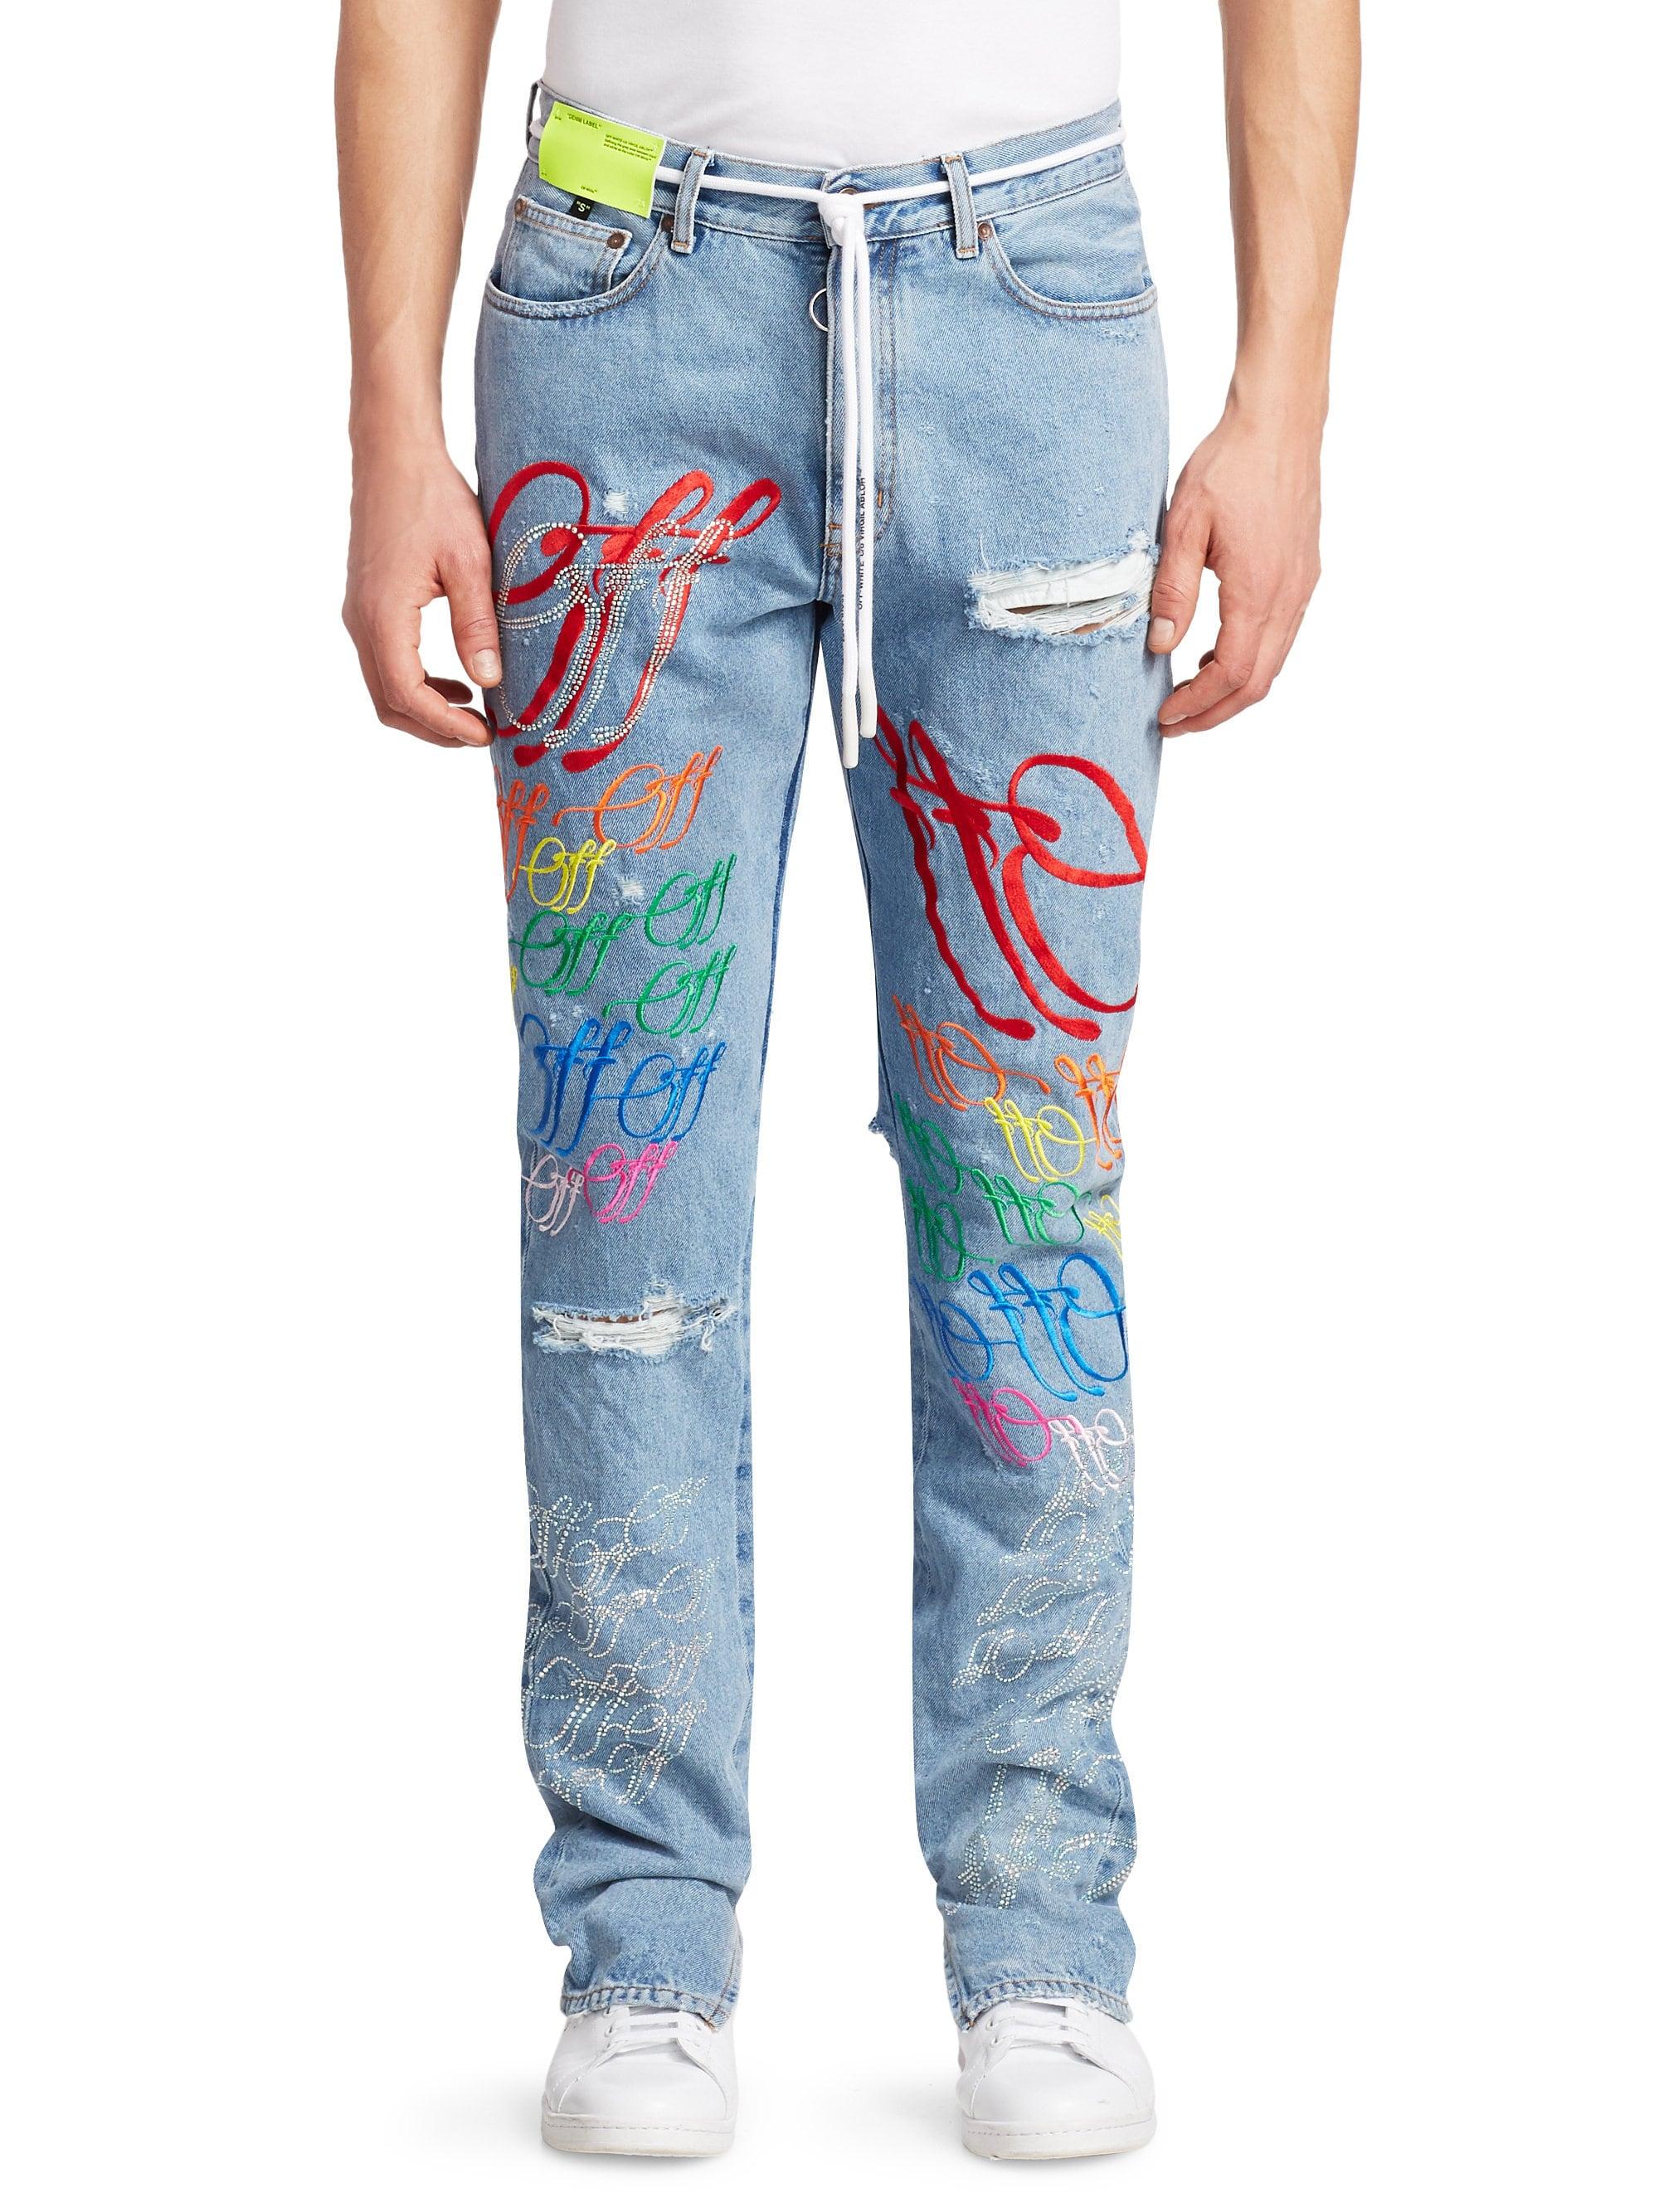 Off-White c/o Virgil Abloh Denim Distressed Graffiti Jeans in Blue for Men  - Lyst